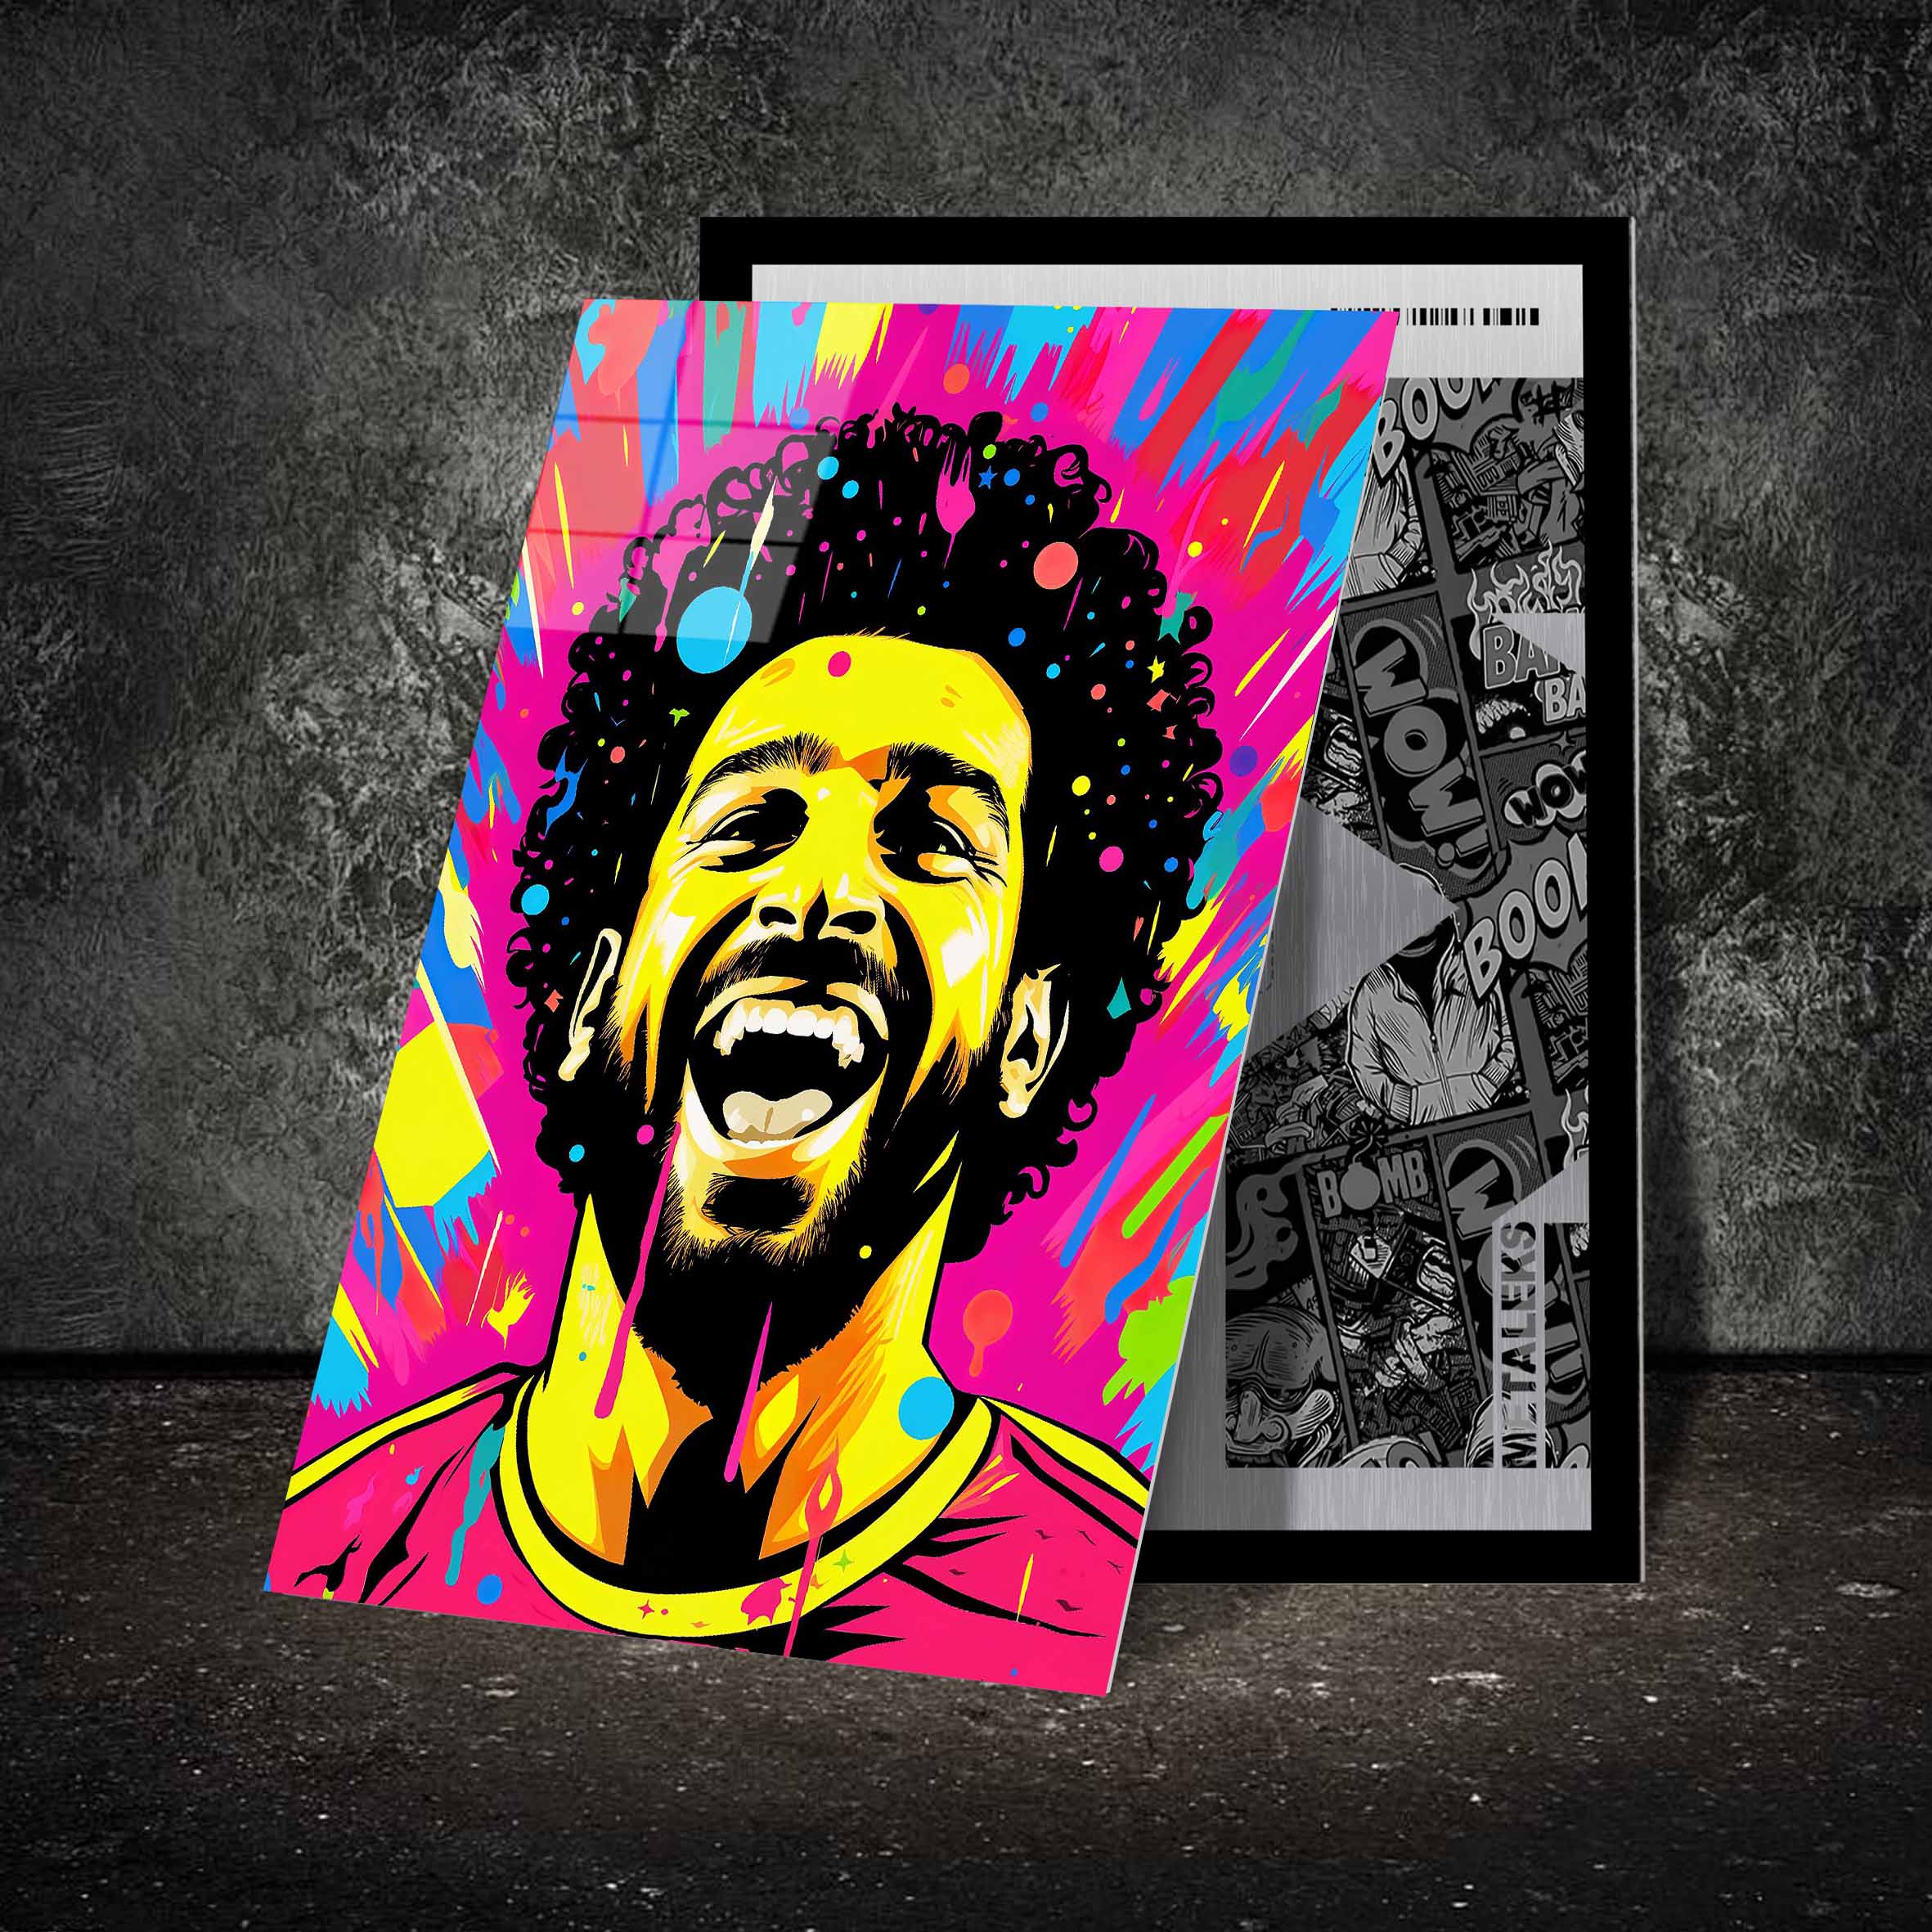 Mohamed        Salah-designed by @WATON CORET